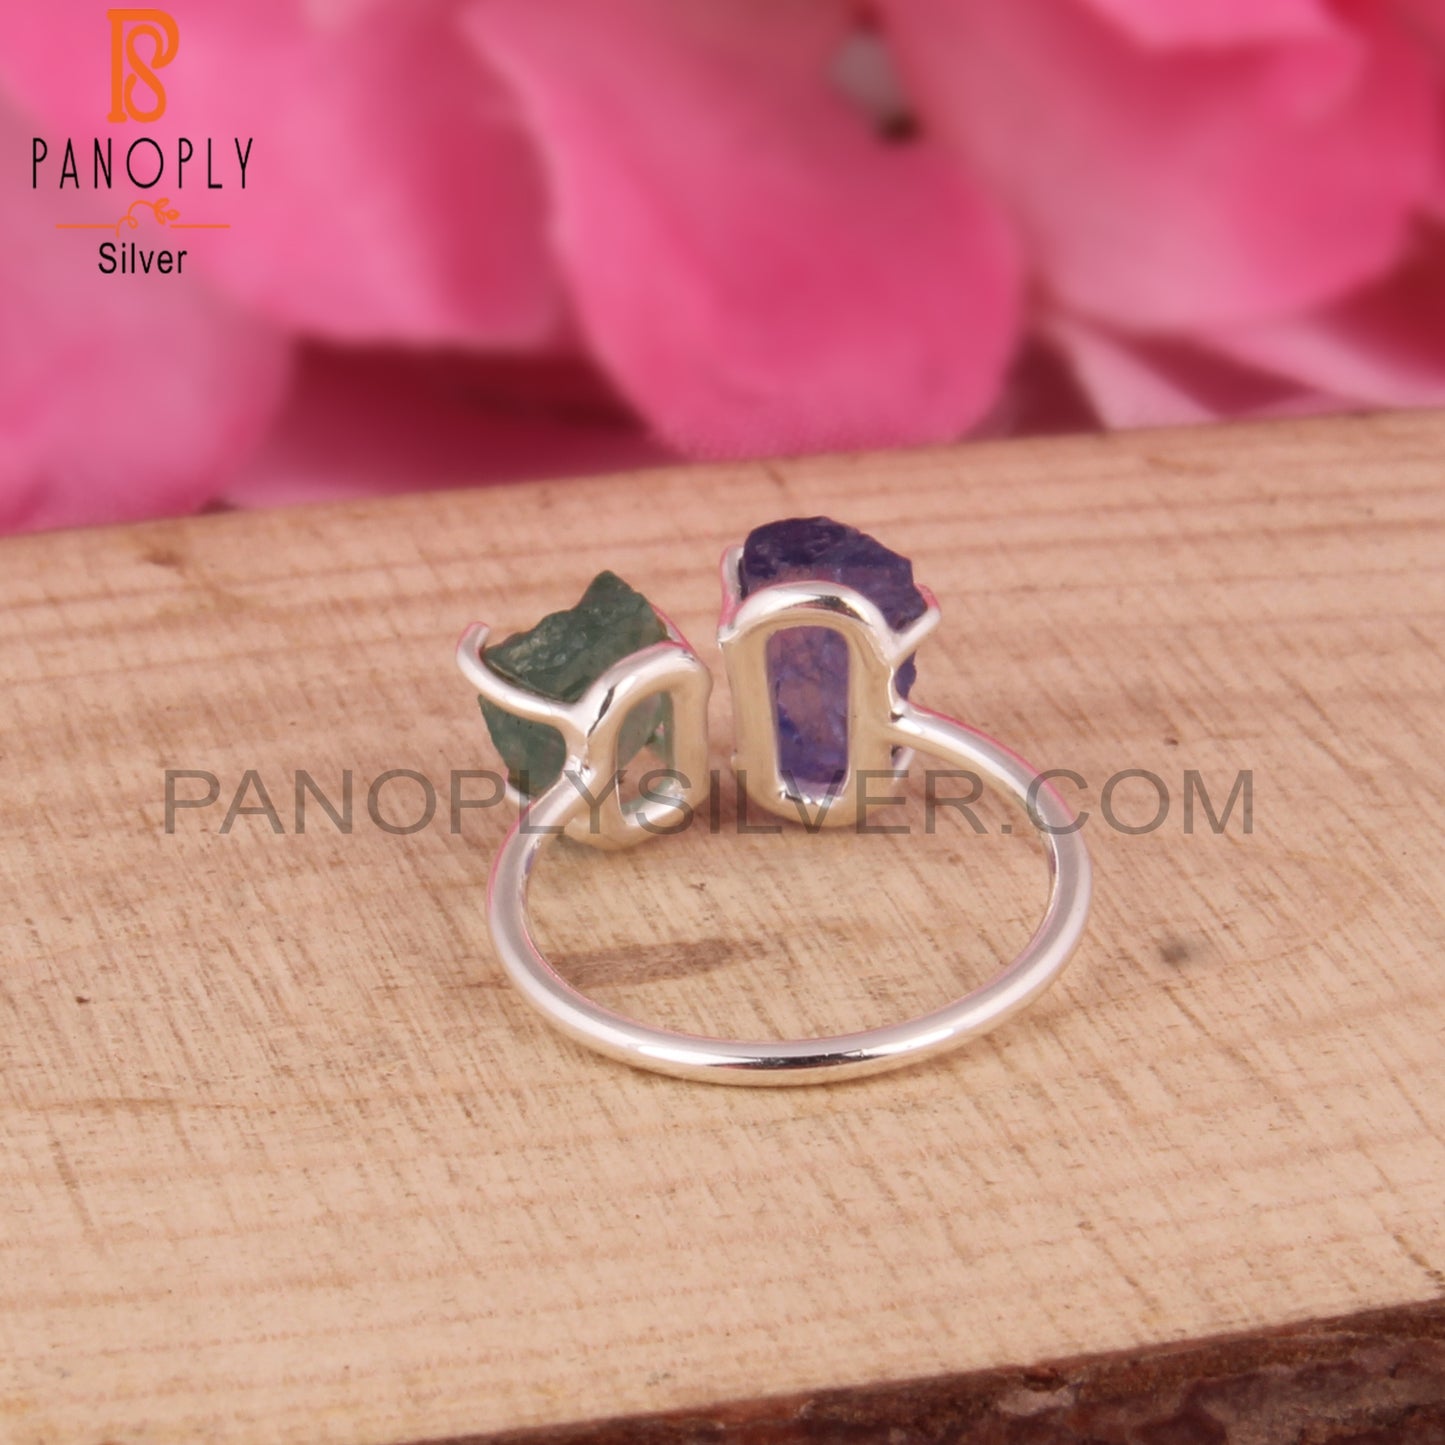 Handmade Emerald & Tanzanite Sterling Silver Ring Jewelry